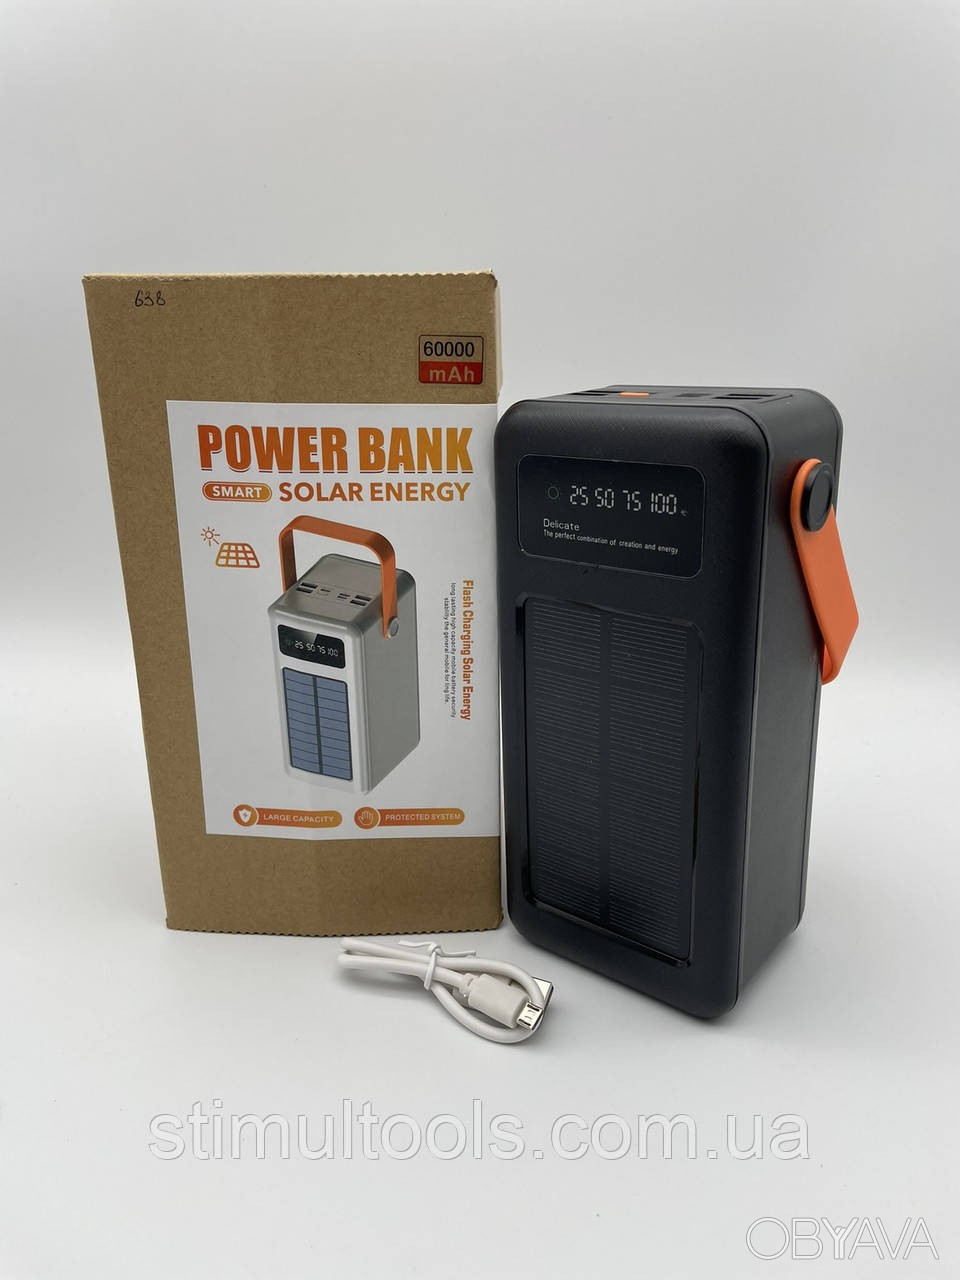 ᐈ Портативное зарядное устройство Power bank 638 - 60000mAh Solar .